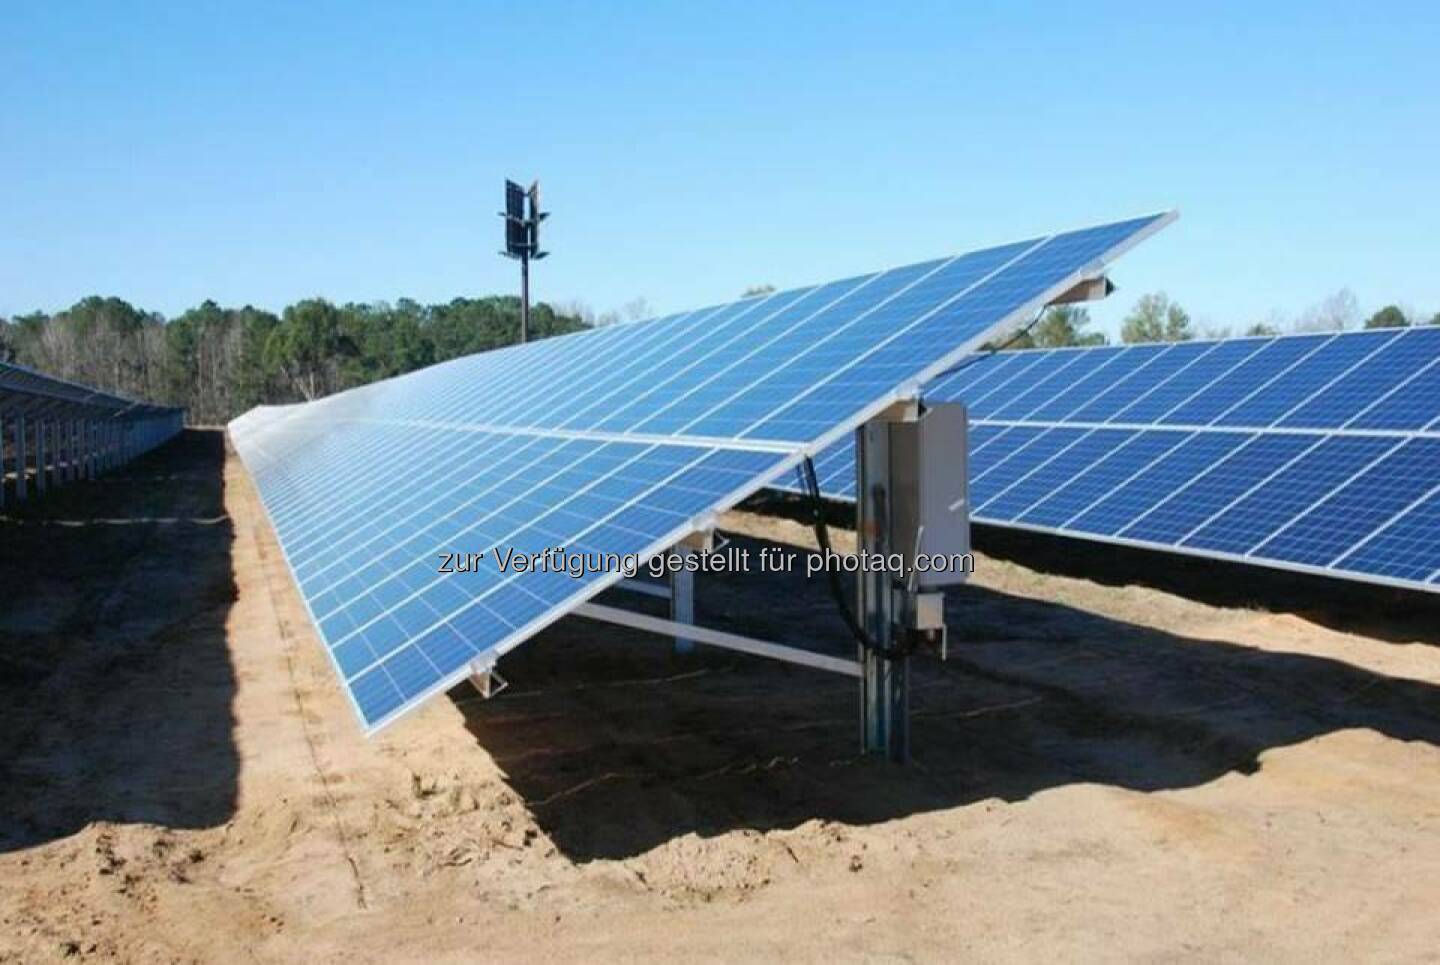 Canadian Solar Modules on South Carolina's largest and first solar farm.  Source: http://facebook.com/Canadian.Solar.CSIQ